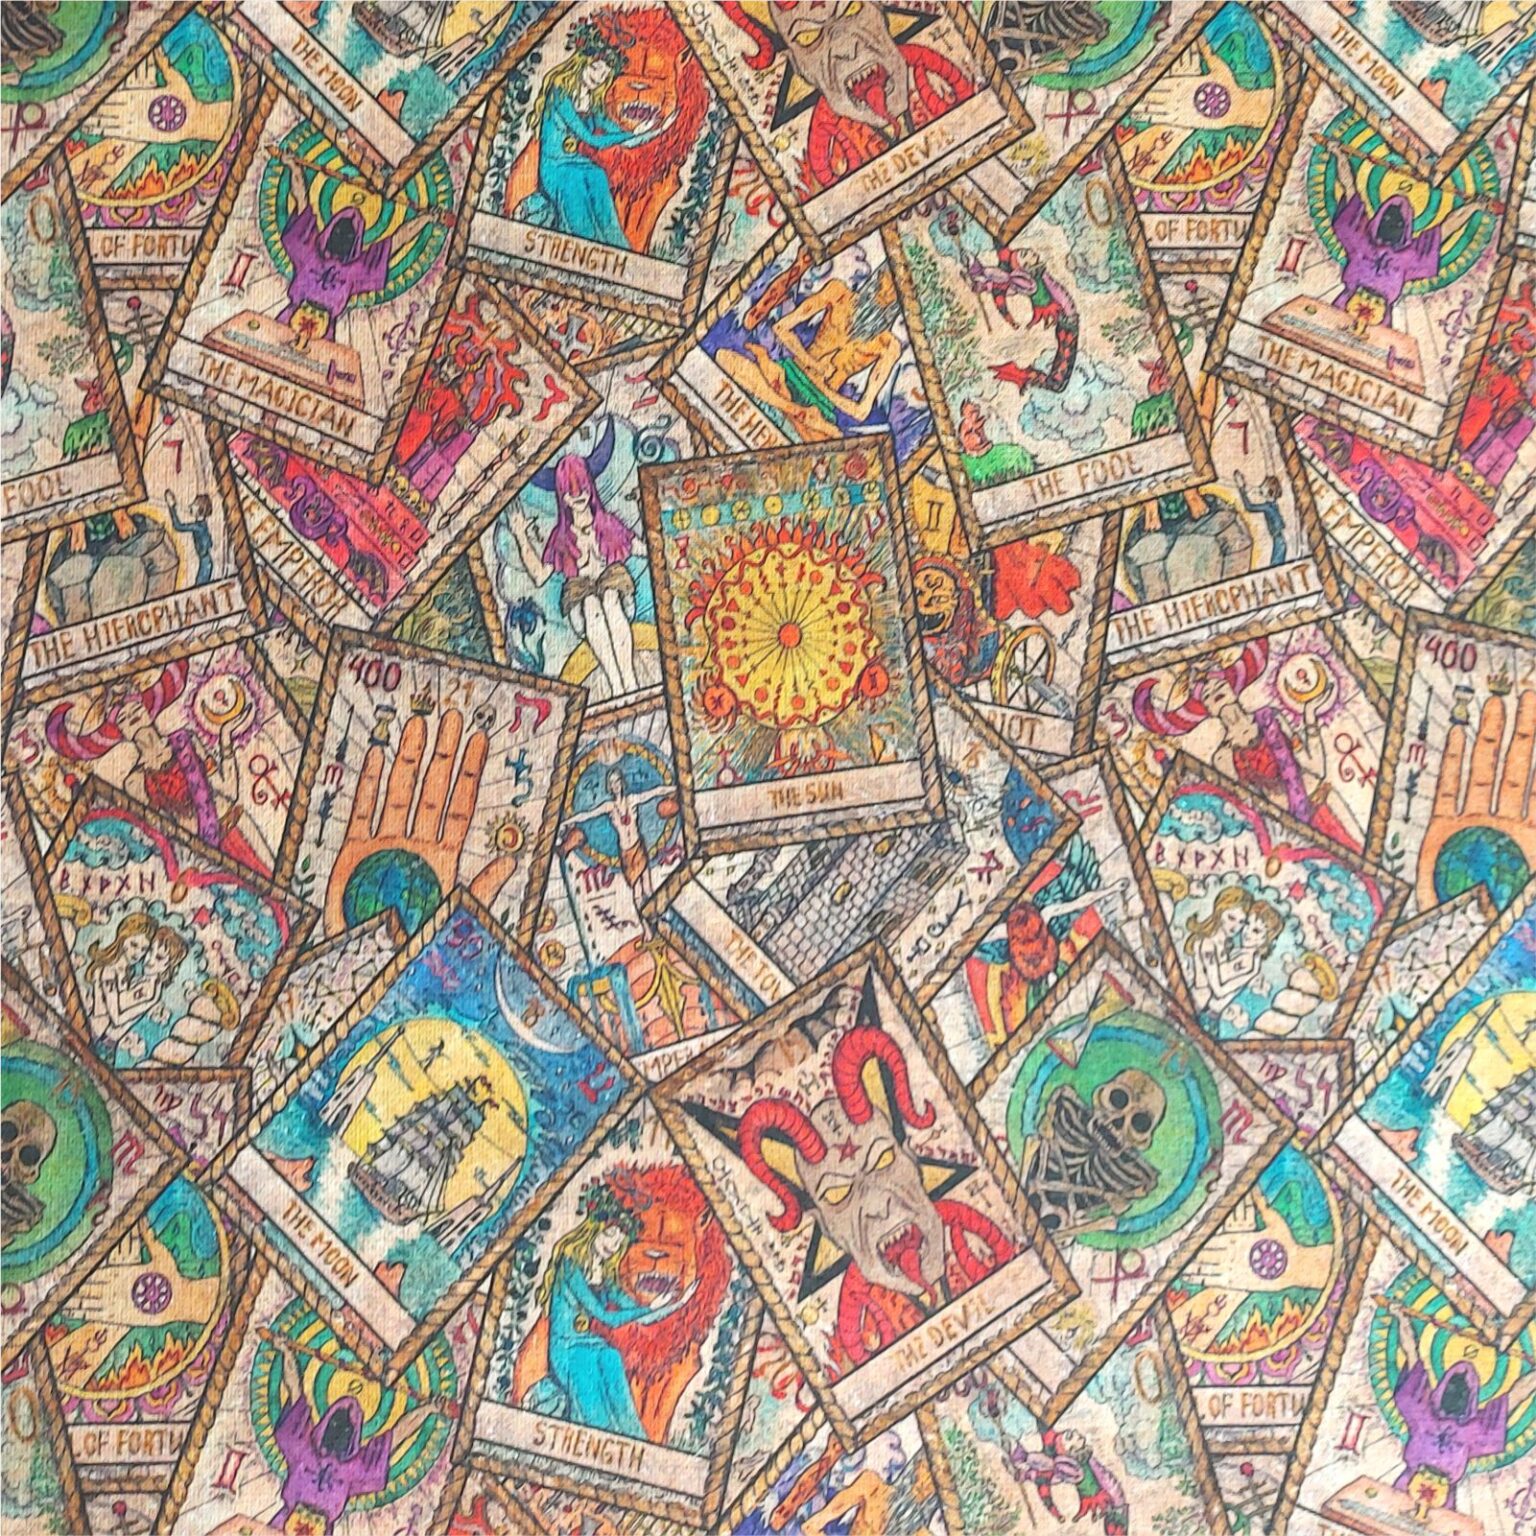 Buy Tarot Card cotton fabric at More Sewing